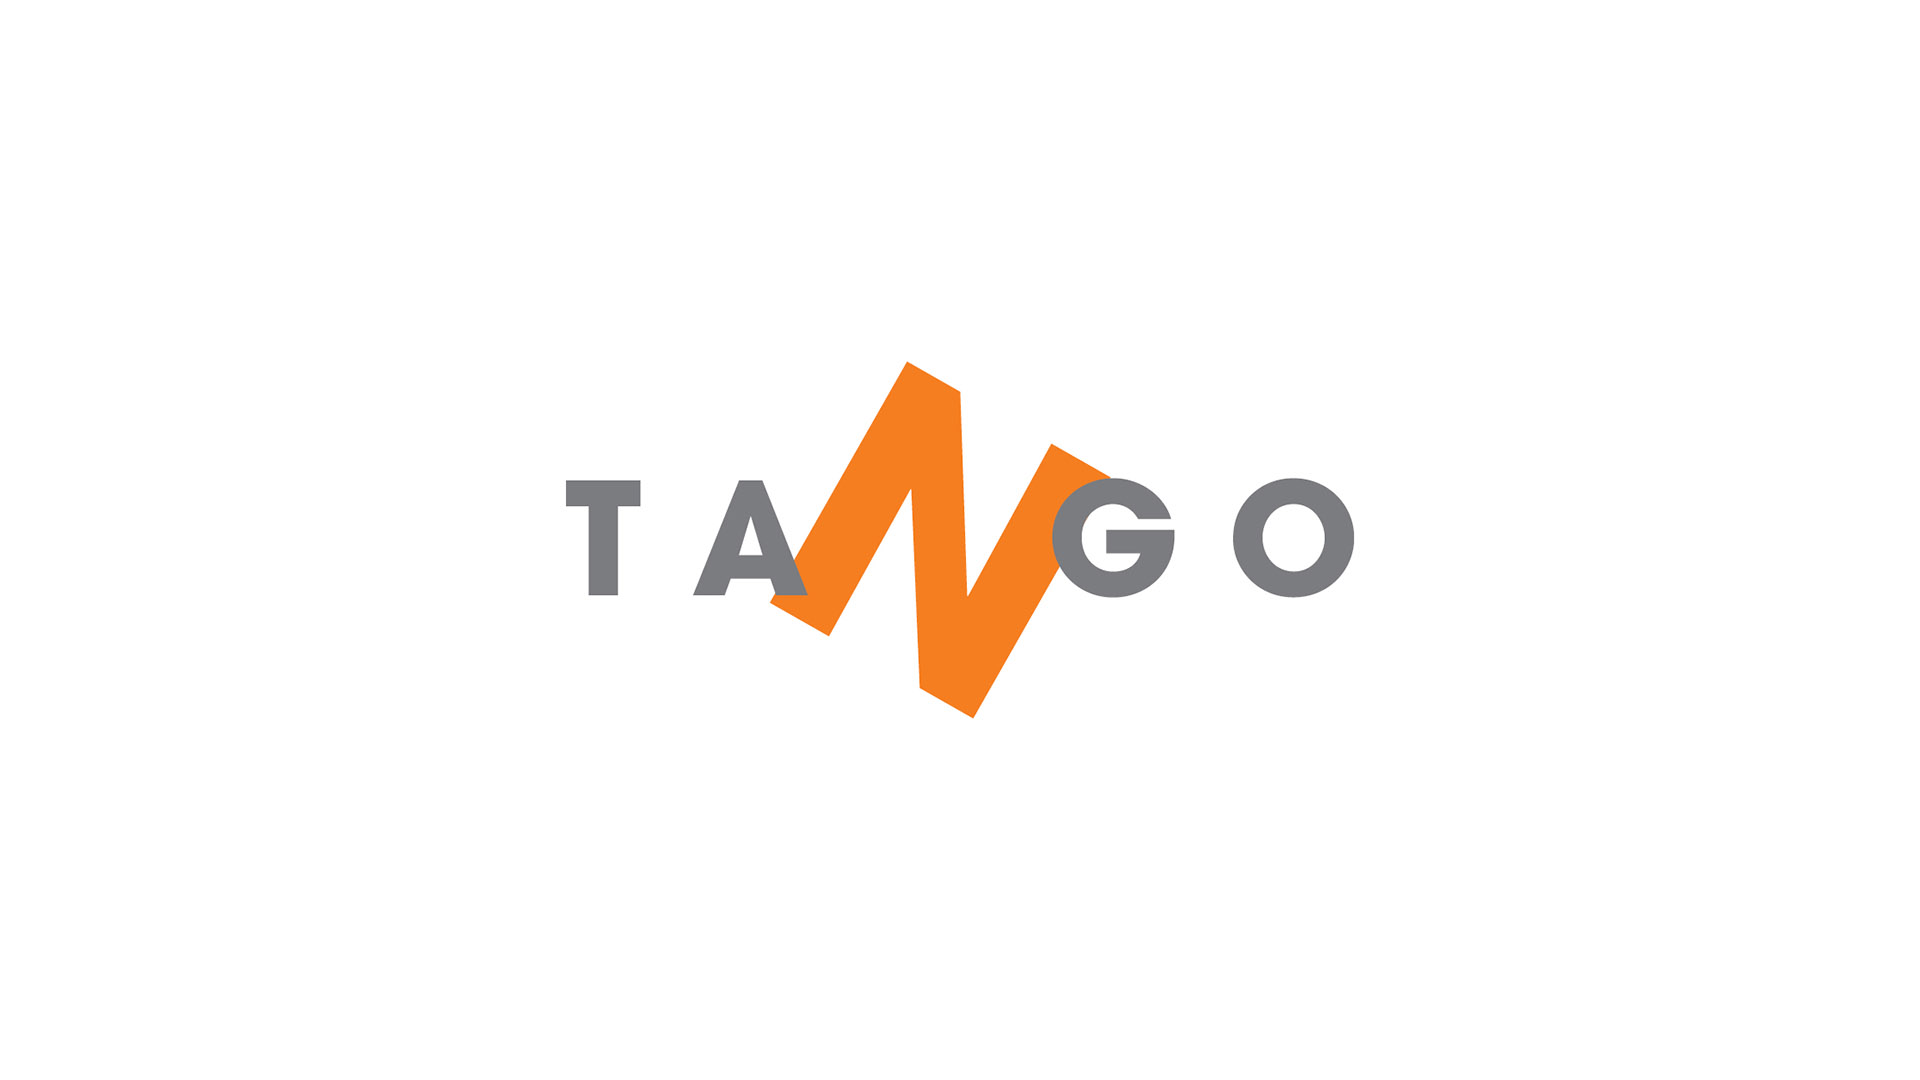 northpoint tango apartments logo orange and light gray type on white